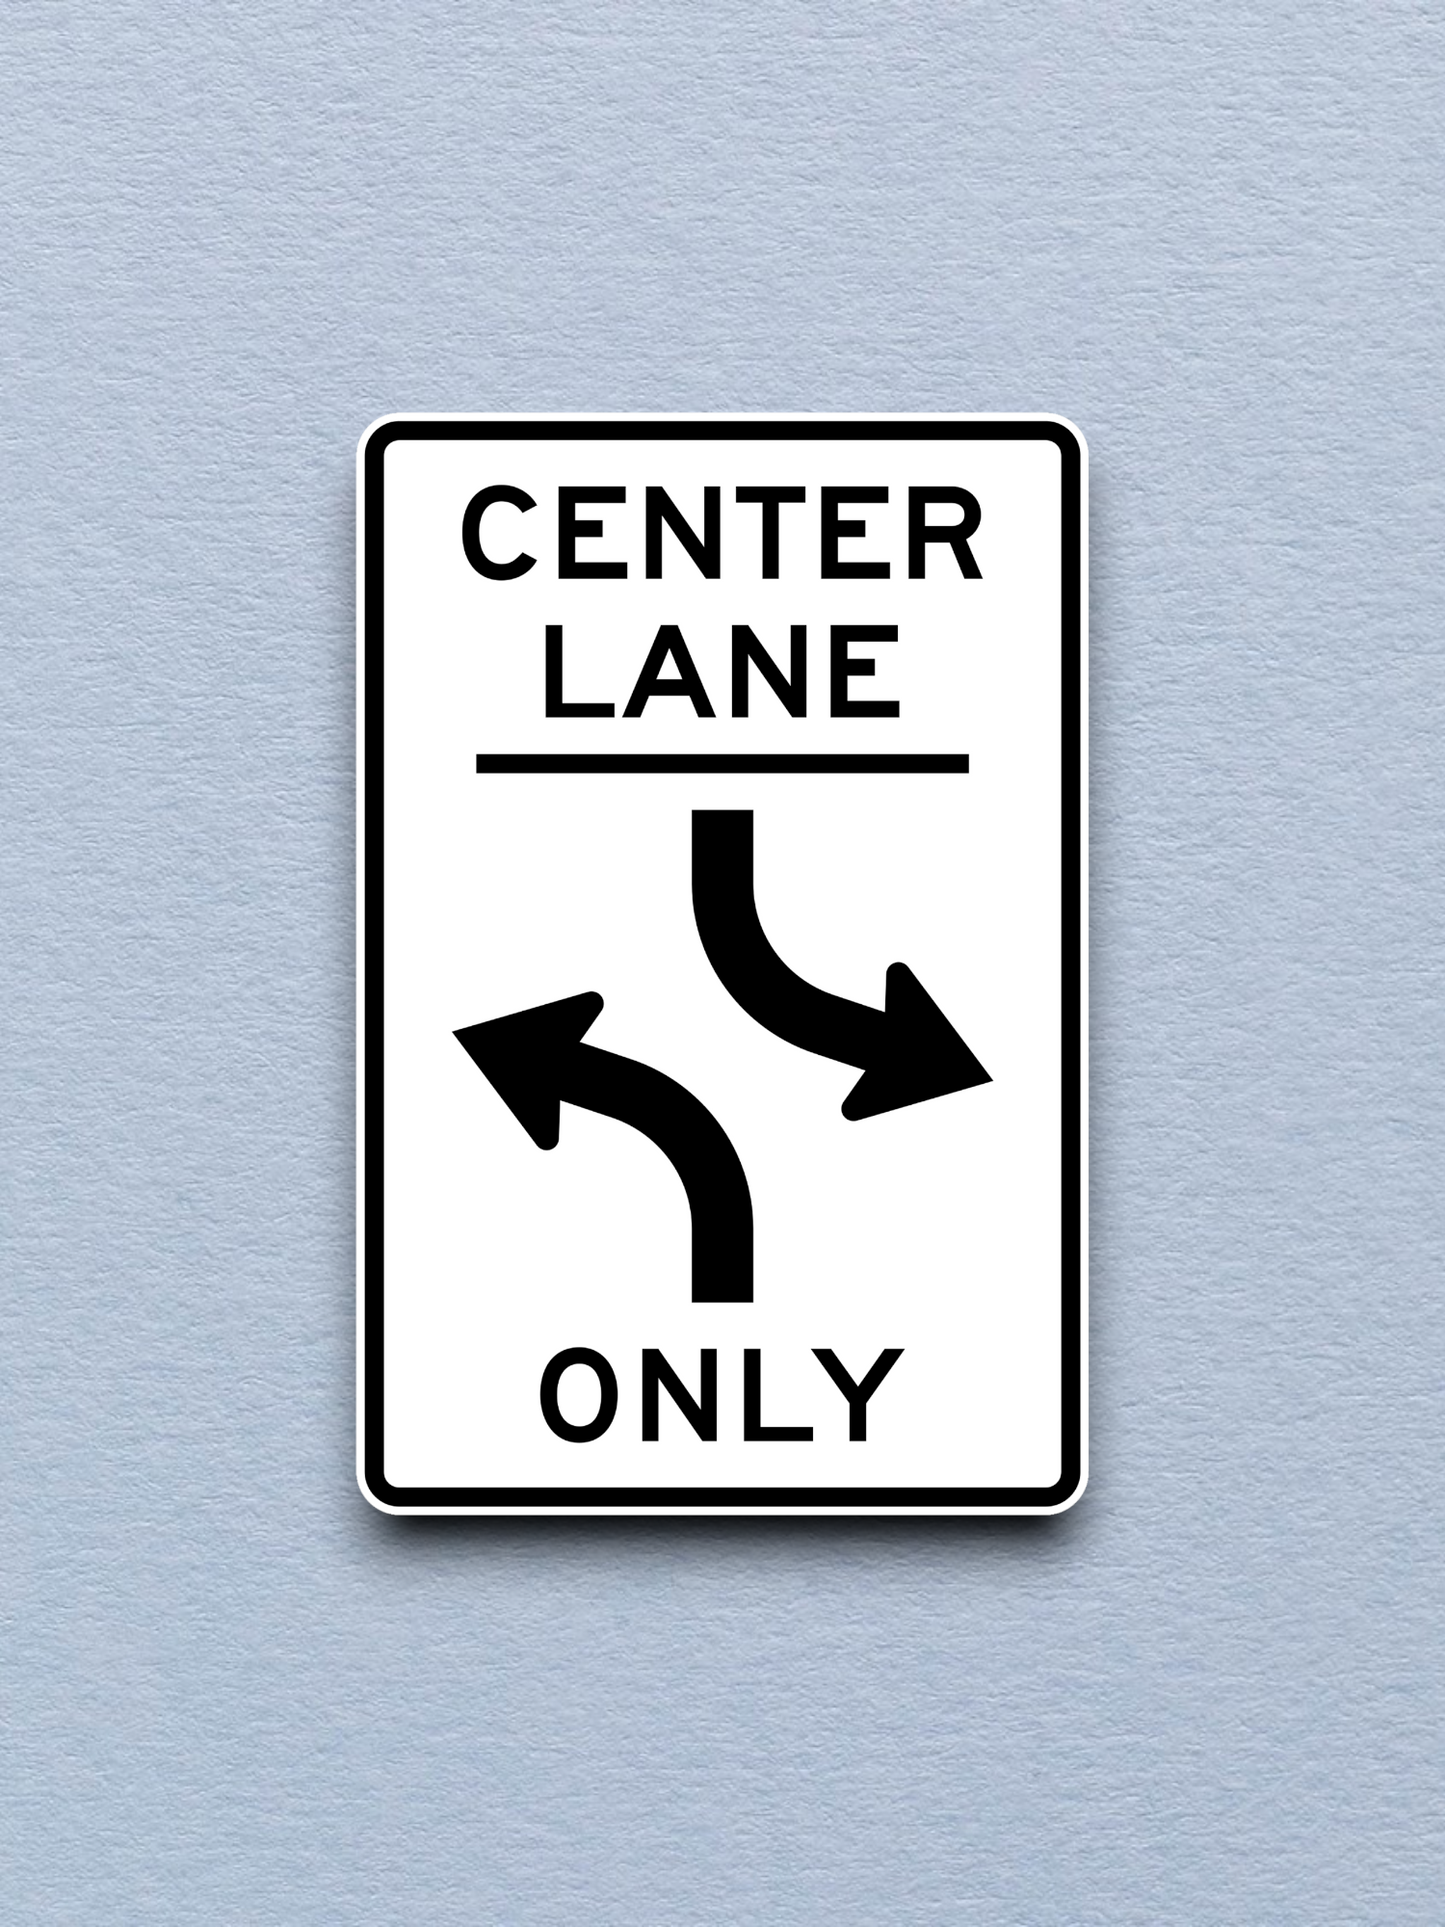 Concurrent left turn lane Alternate 02 United States Road Sign Sticker